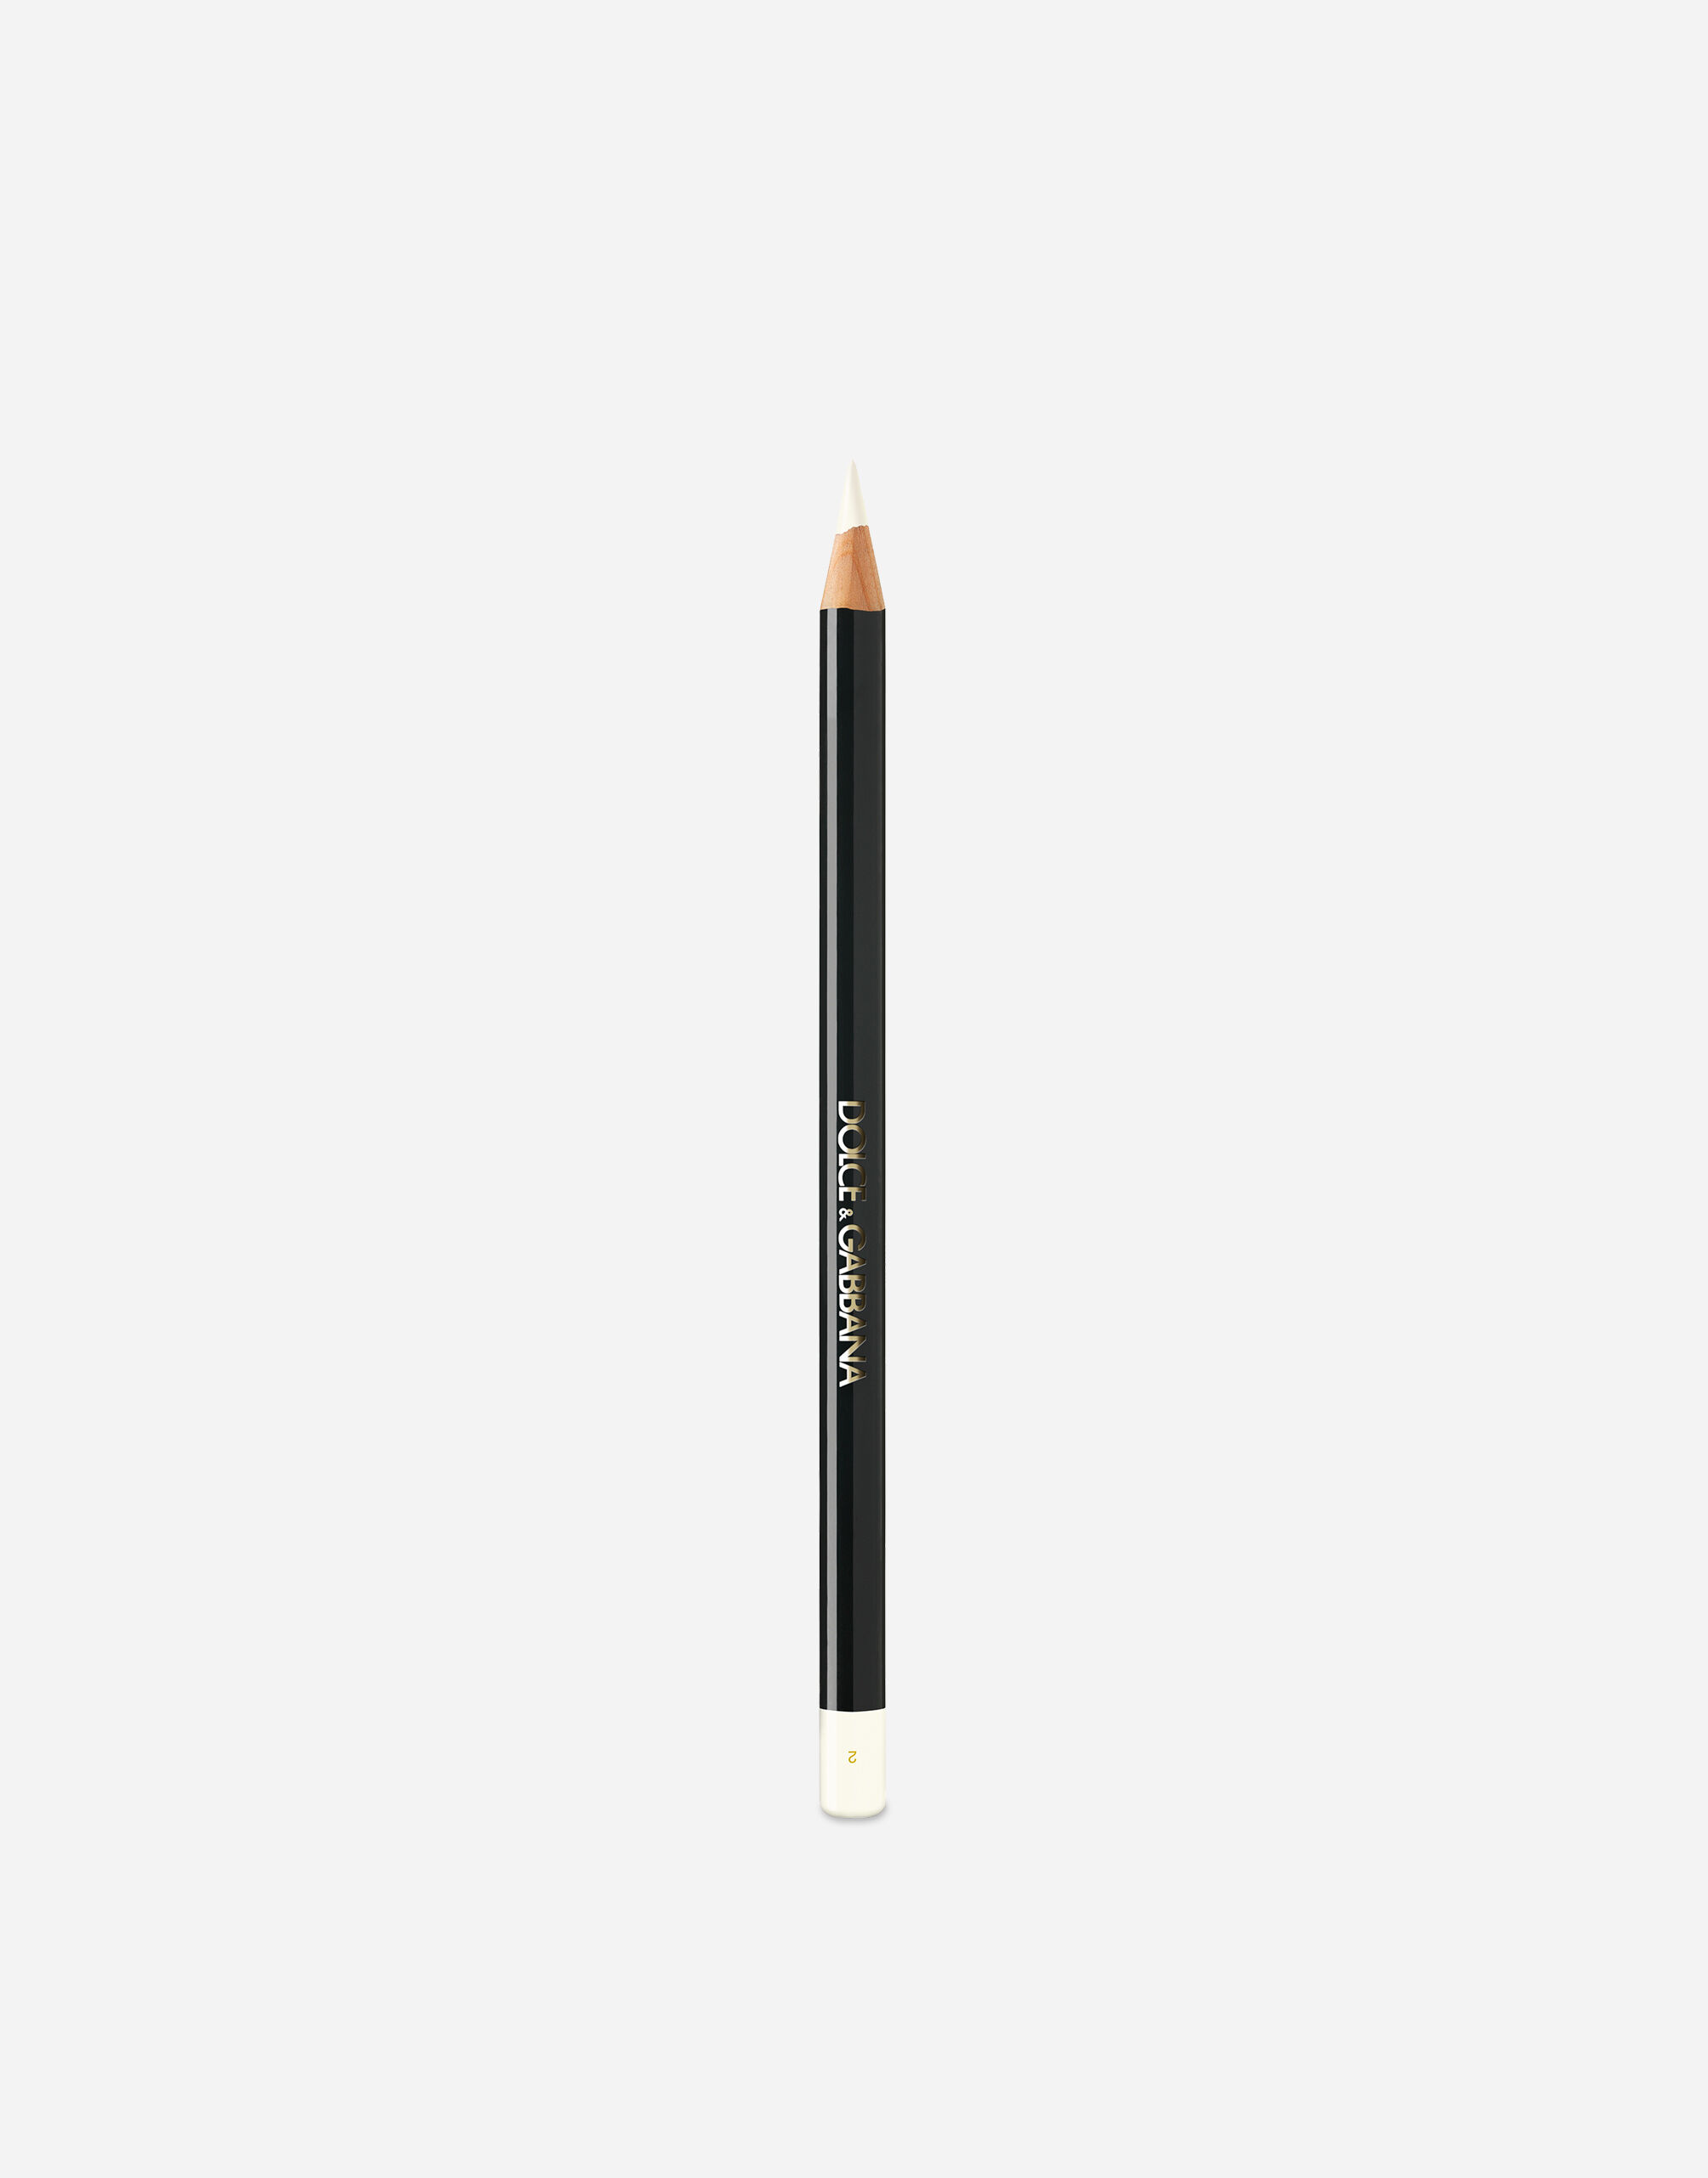 Карандаш-кайал для глаз DOLCE & GABBANA Khol Pencil стойкий, тон 2 True White, 2,04 г карандаш для глаз shinewell charm pencil т 2 графитовый